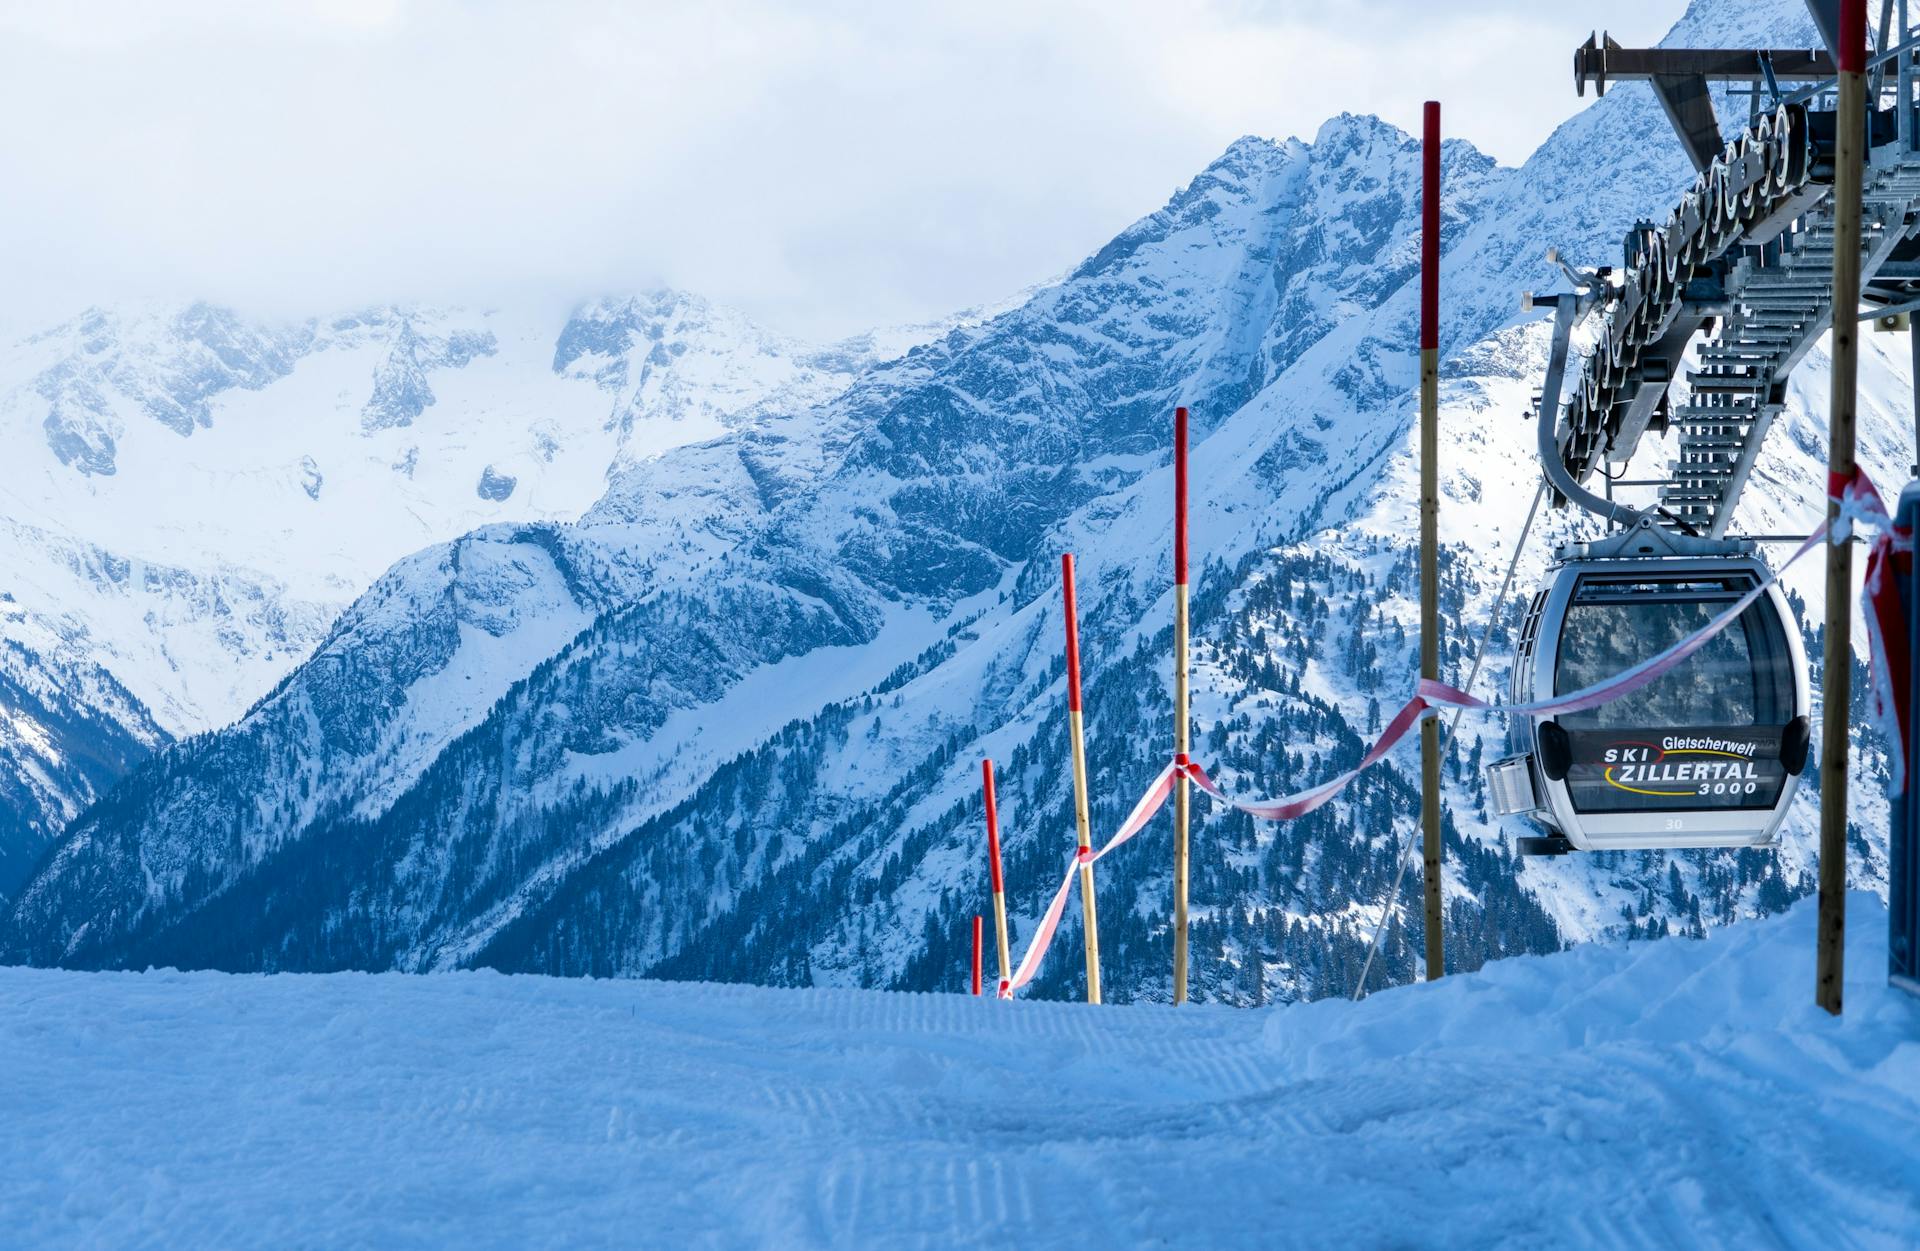 Gondola taking skiers to top of snowy mountain ski slope in Mayrhofen Austria